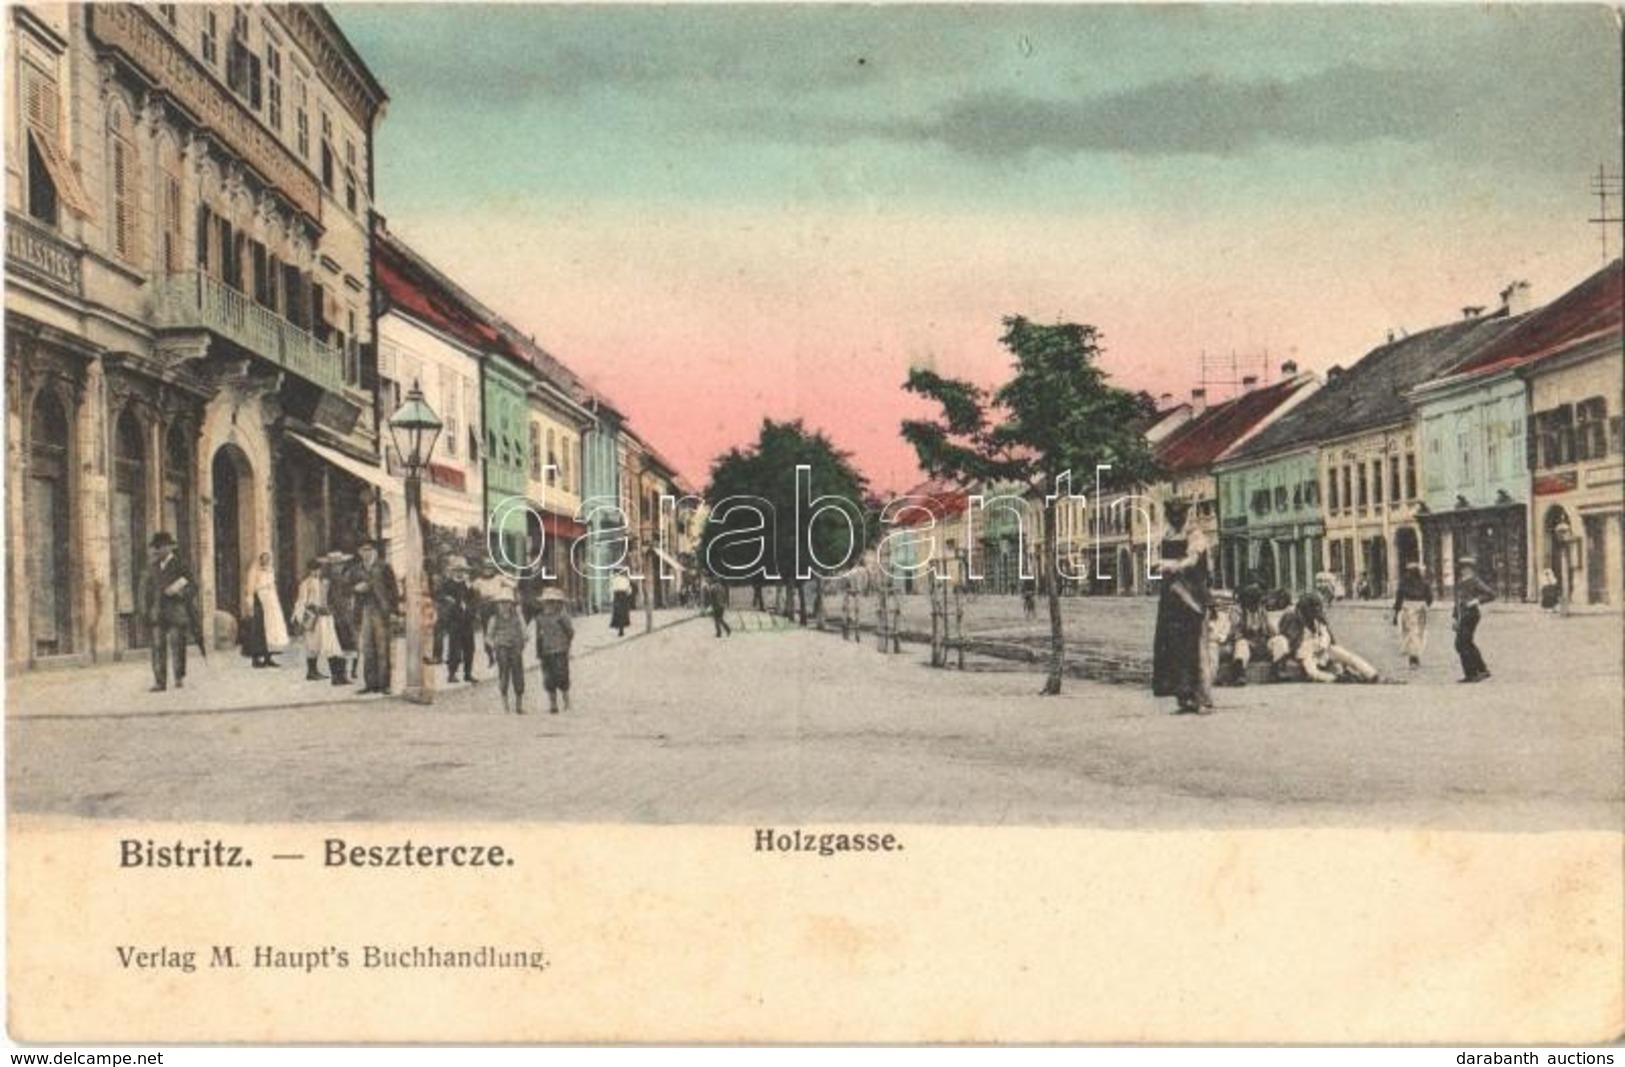 T2/T3 1906  Beszterce, Bistritz, Bistrita; Holzgasse / Fa Utca, Keresztes üzlete. Verlag M. Haupt's Buchhandlung / Stree - Ohne Zuordnung